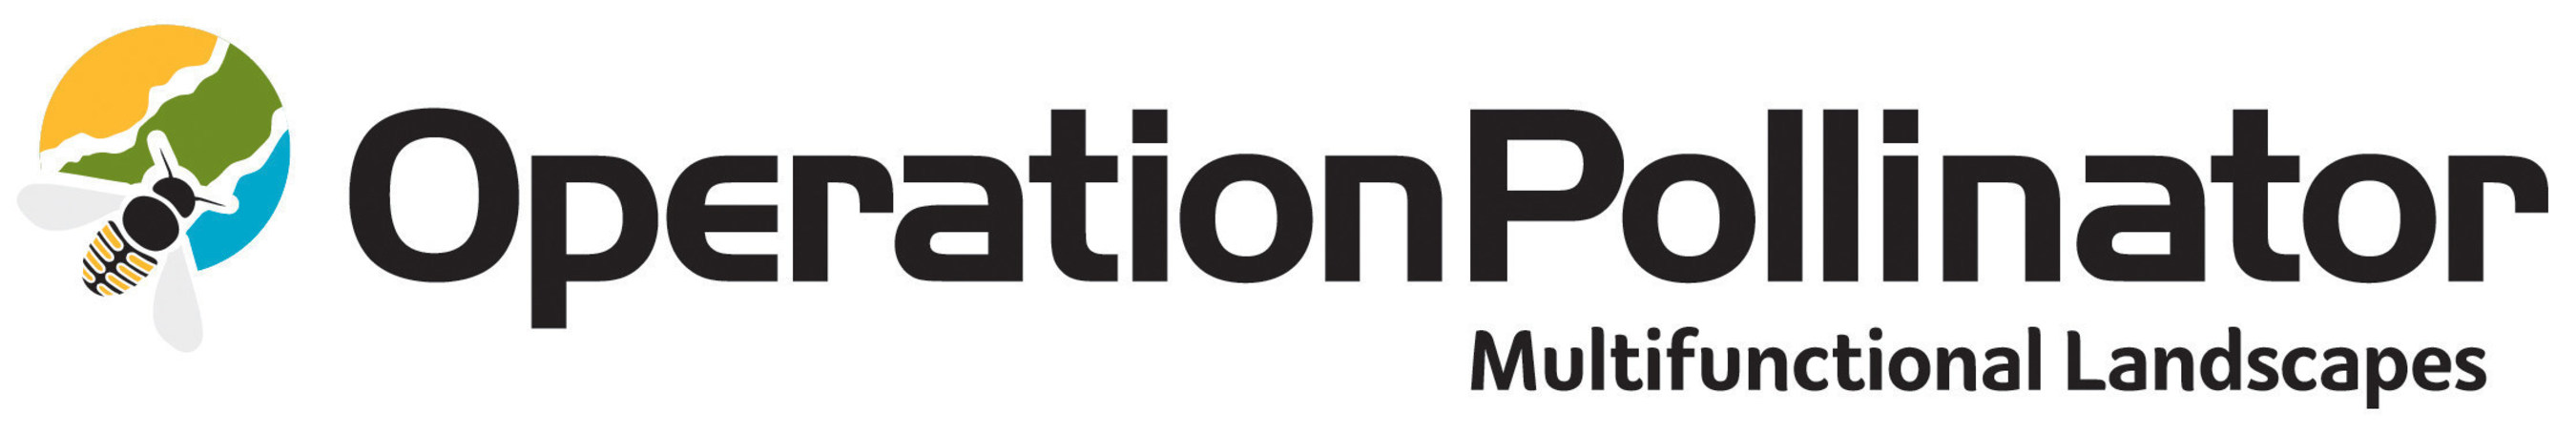 Operation Pollinator logo